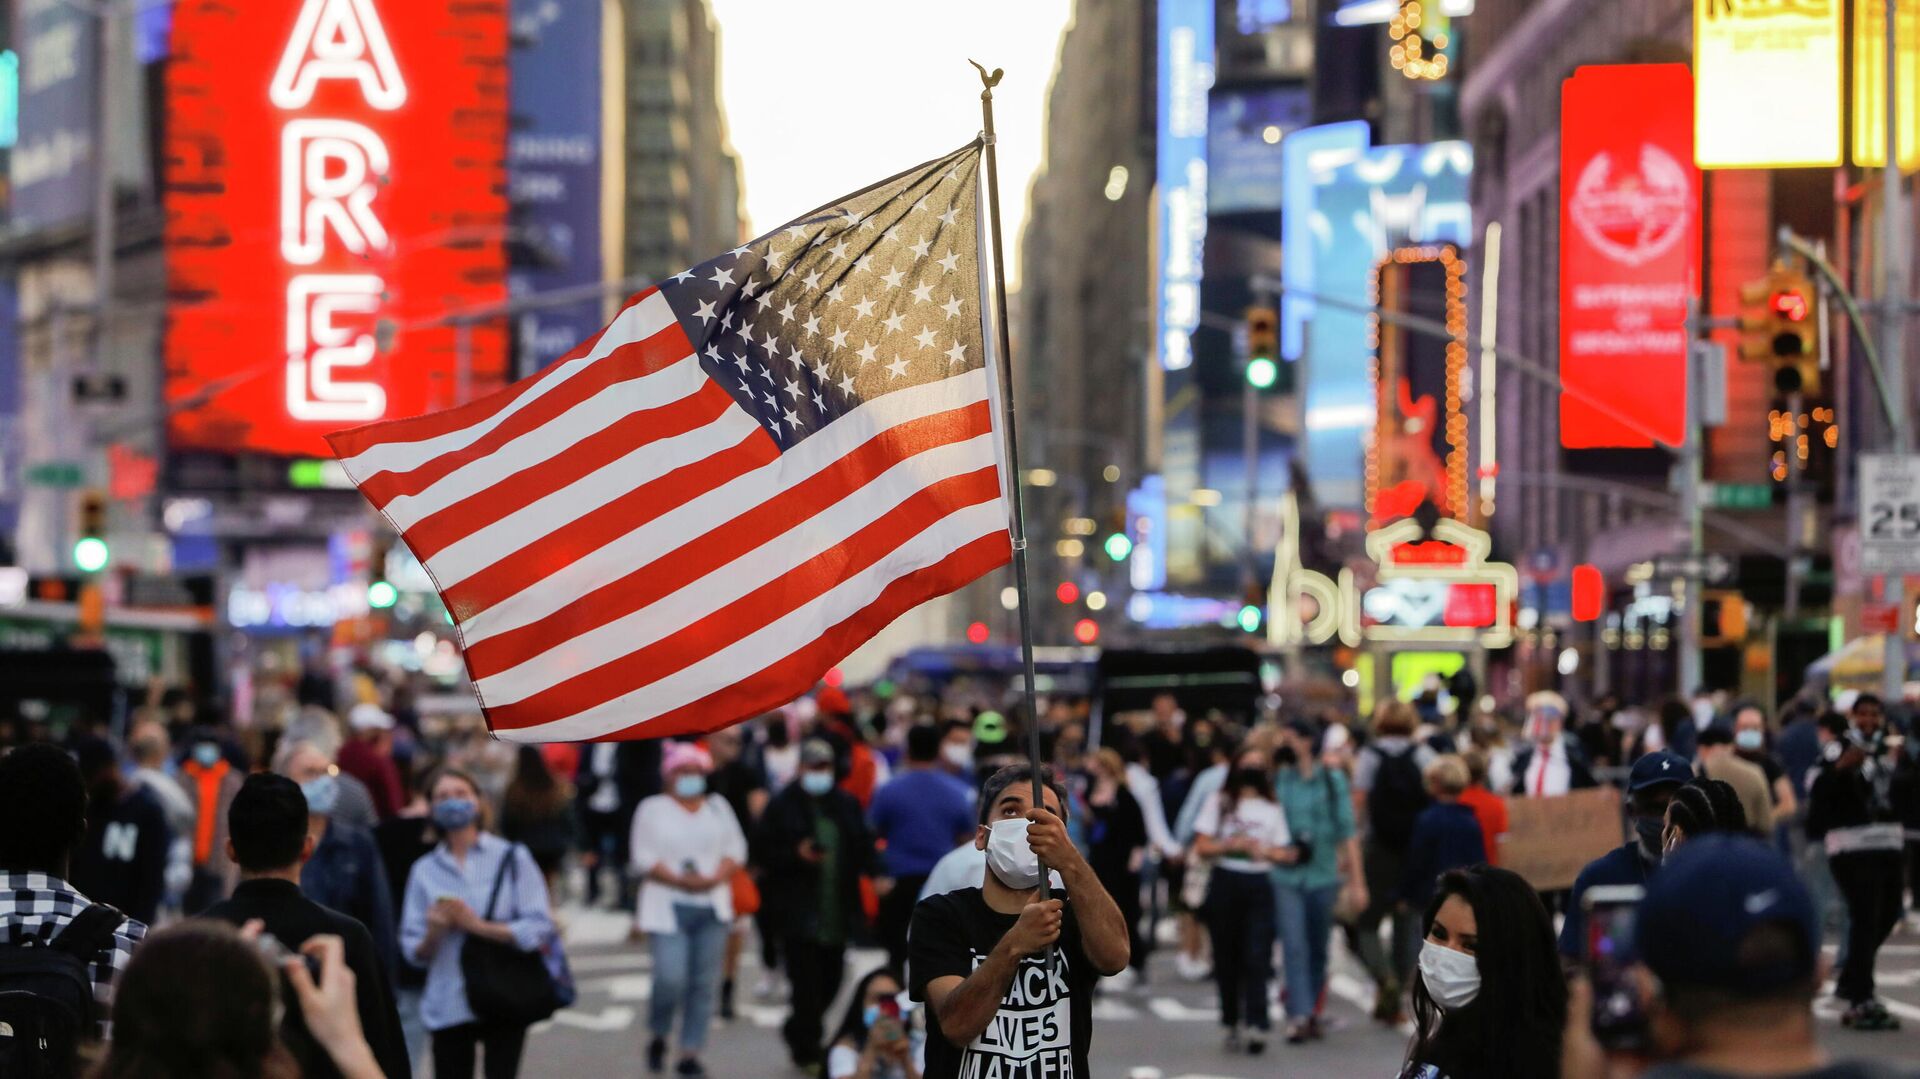 Мужчина с флагом США на Таймс-сквер в Нью-Йорке - РИА Новости, 1920, 01.12.2020